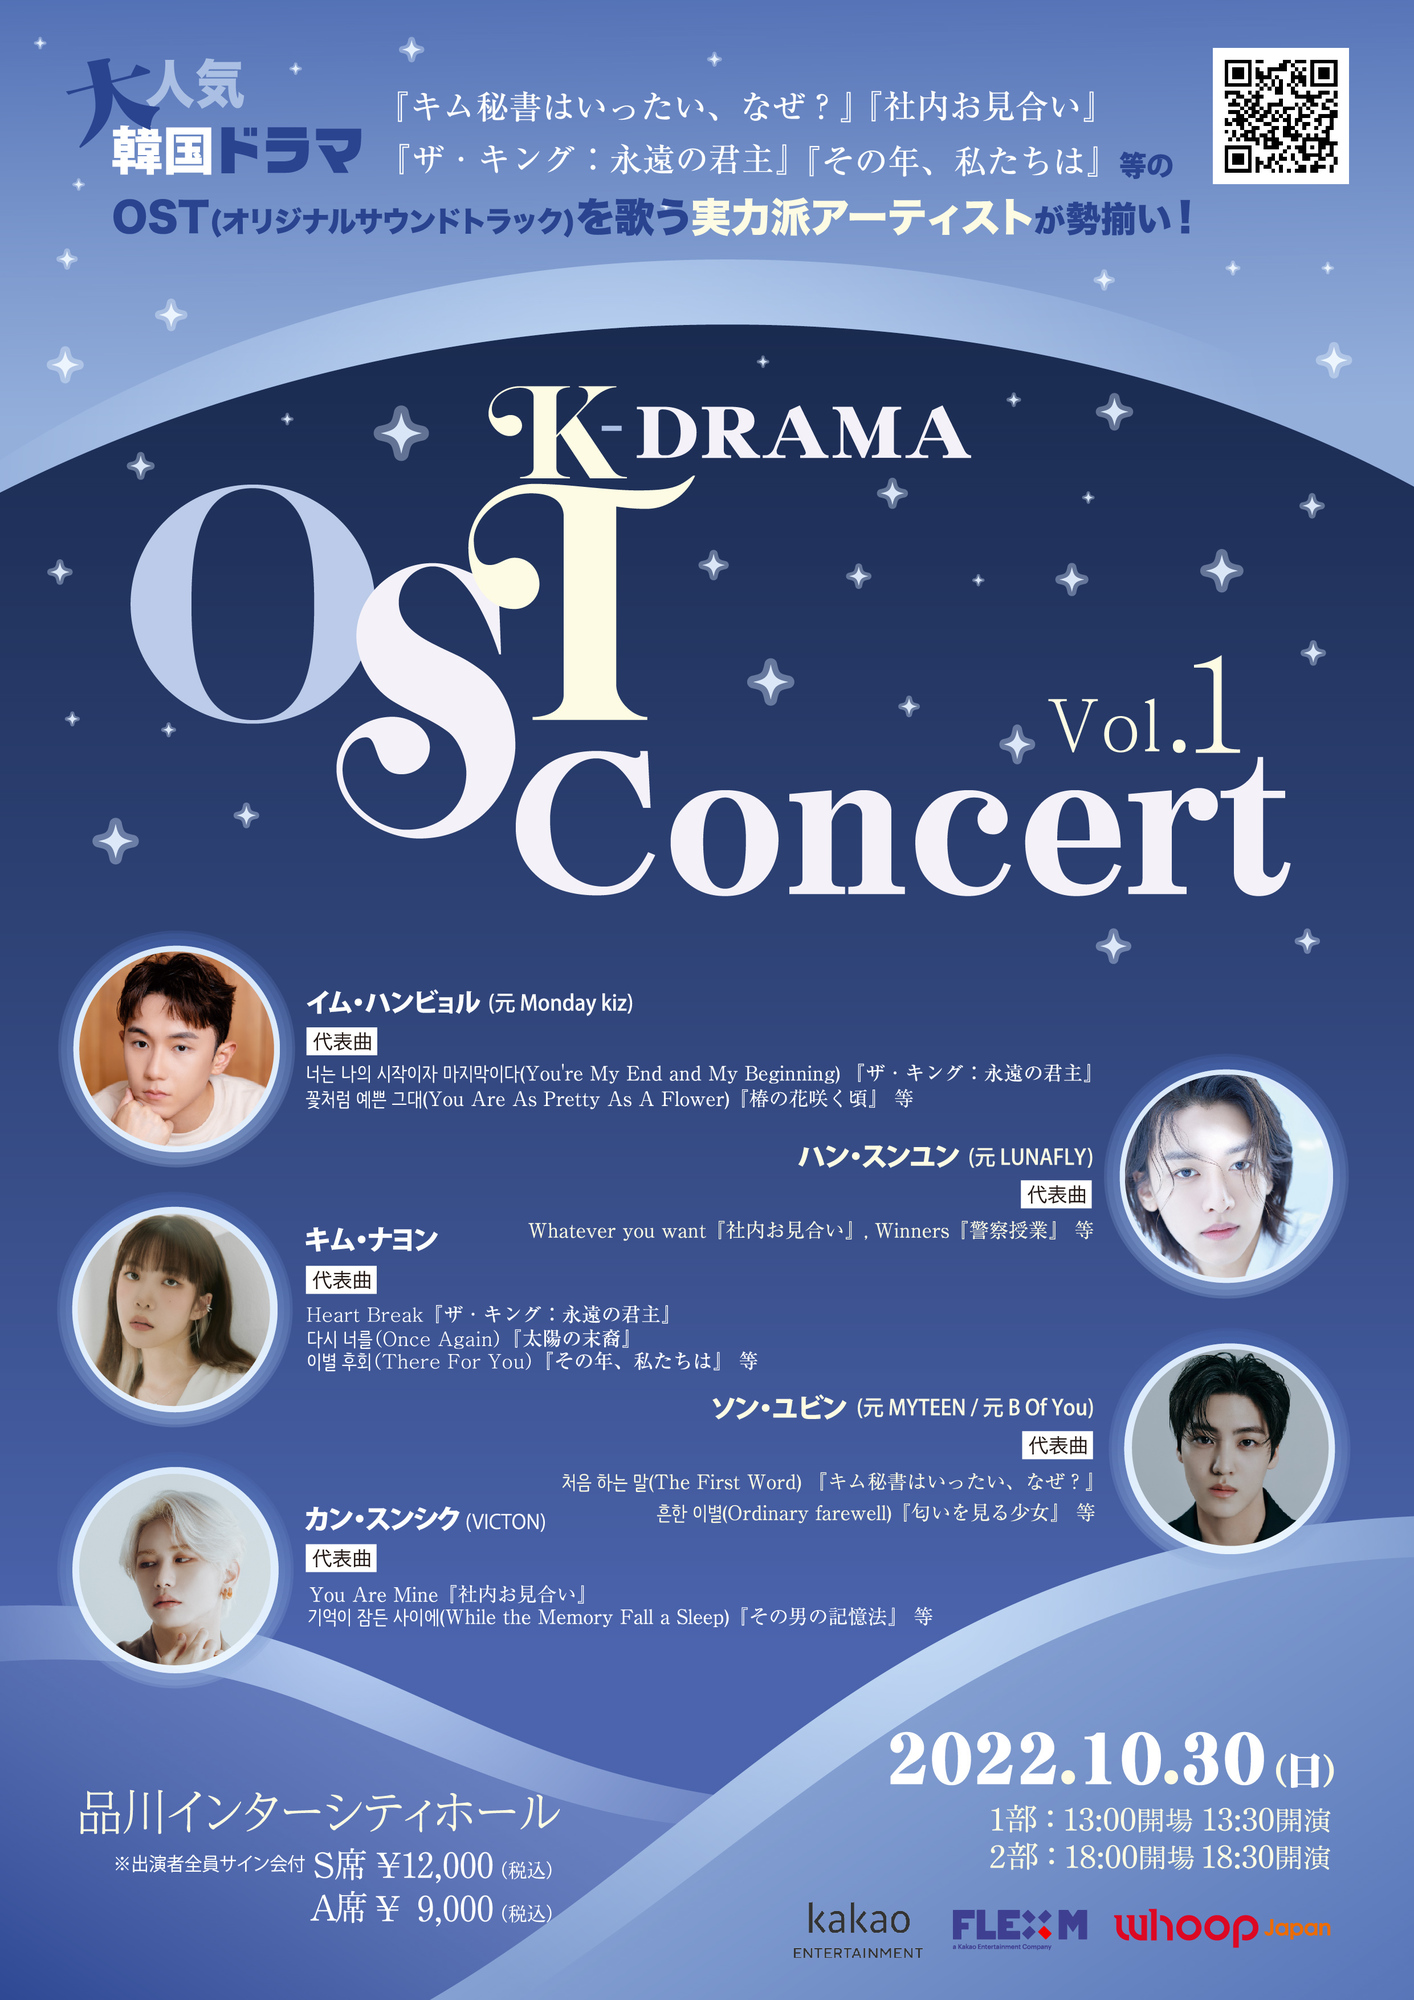 K-DRAMA OST Concert Vol.1 [1部]